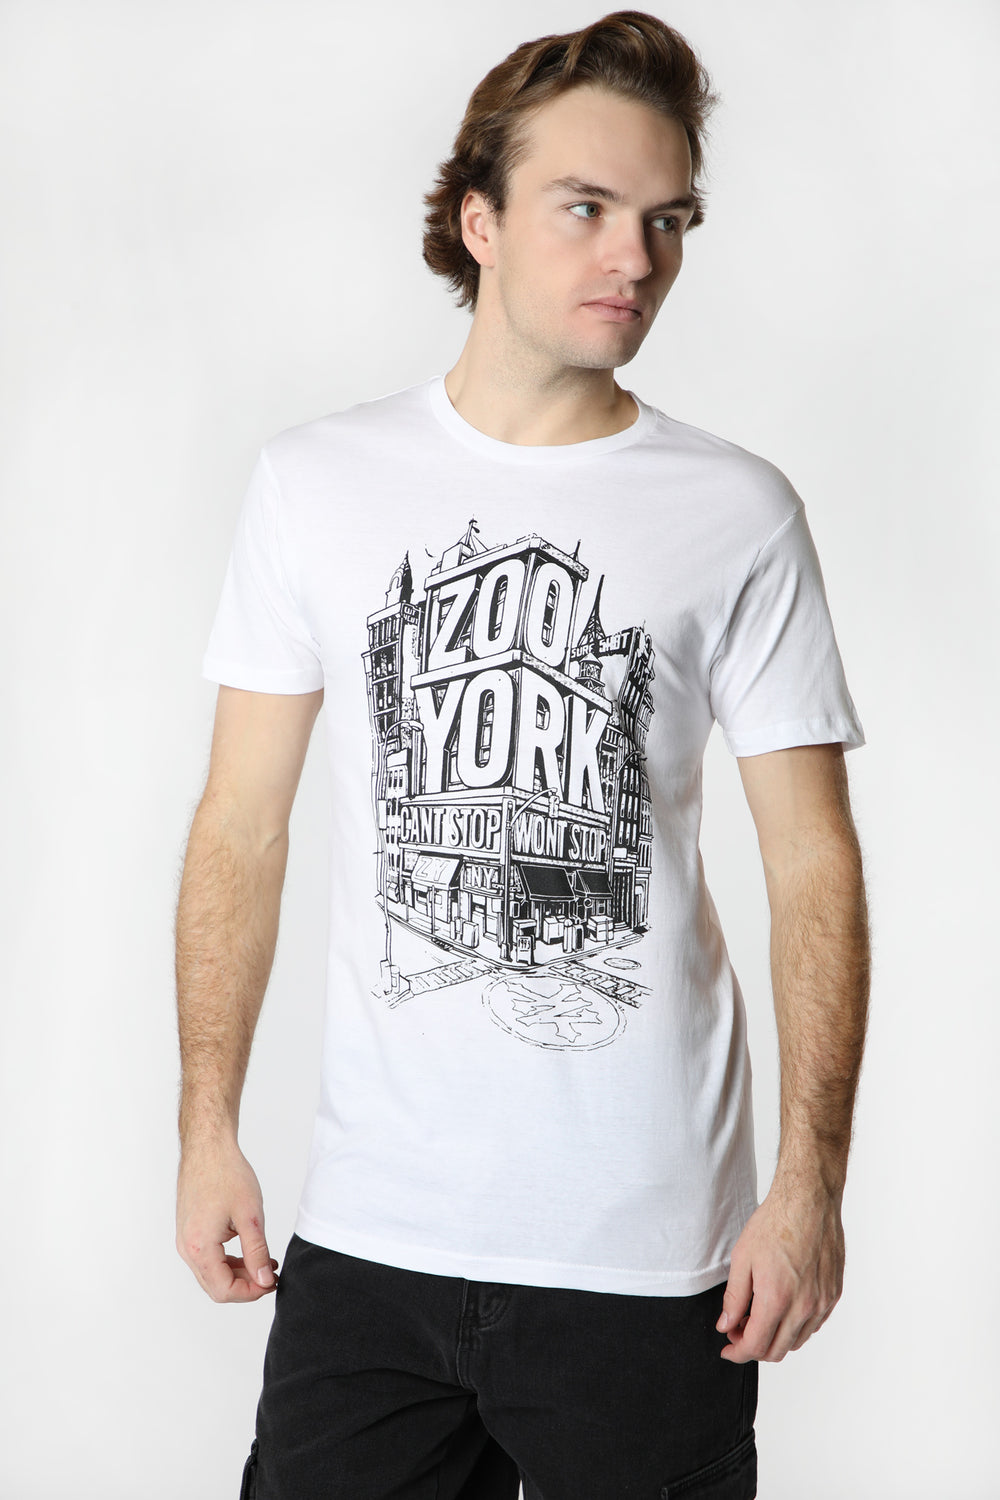 T-Shirt Imprimé Unbreakable Zoo York Homme T-Shirt Imprimé Unbreakable Zoo York Homme